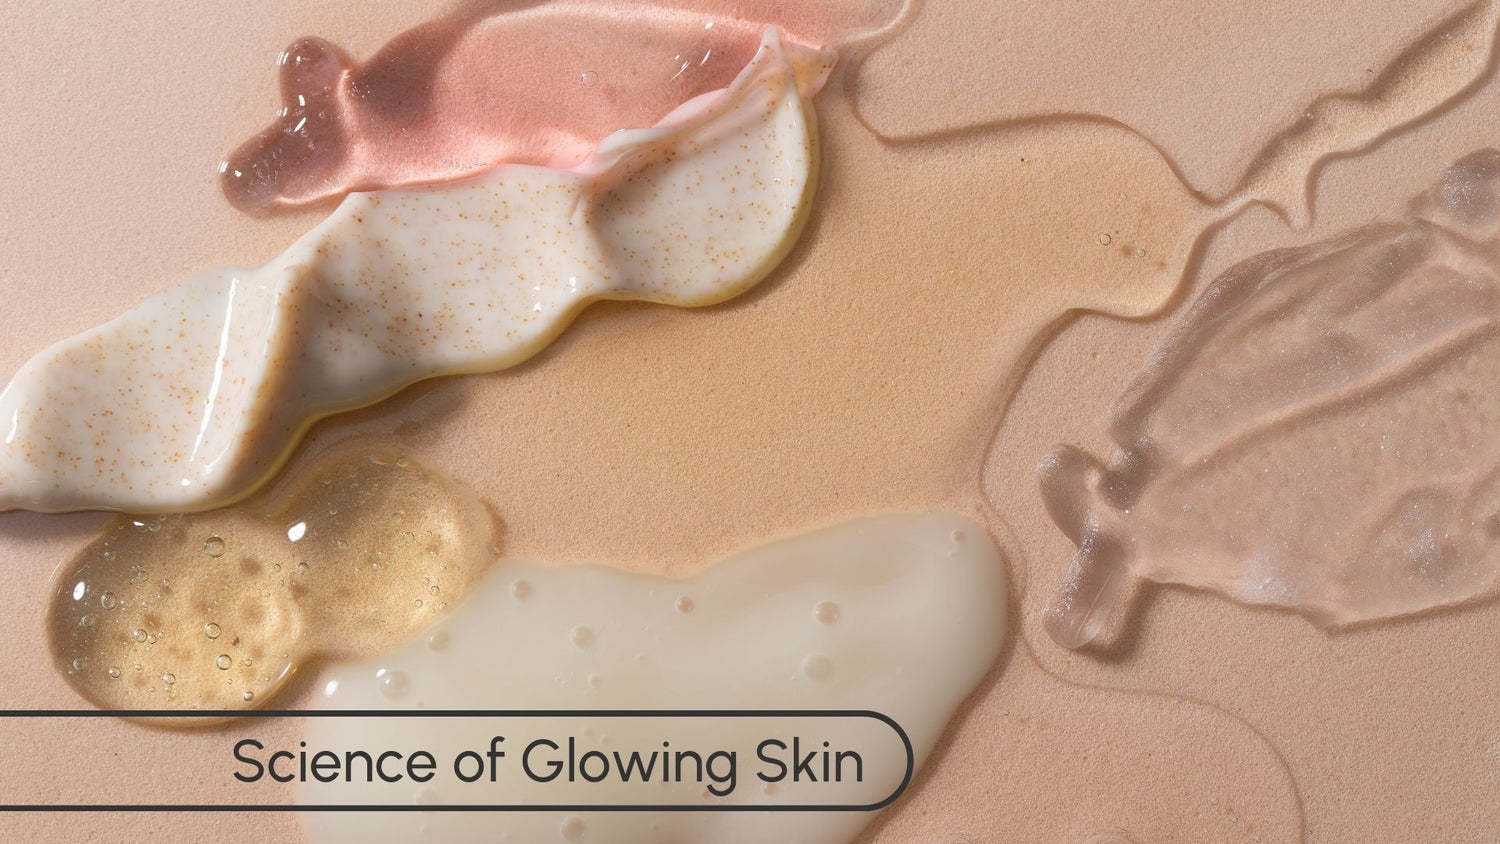 Science of glowing skin